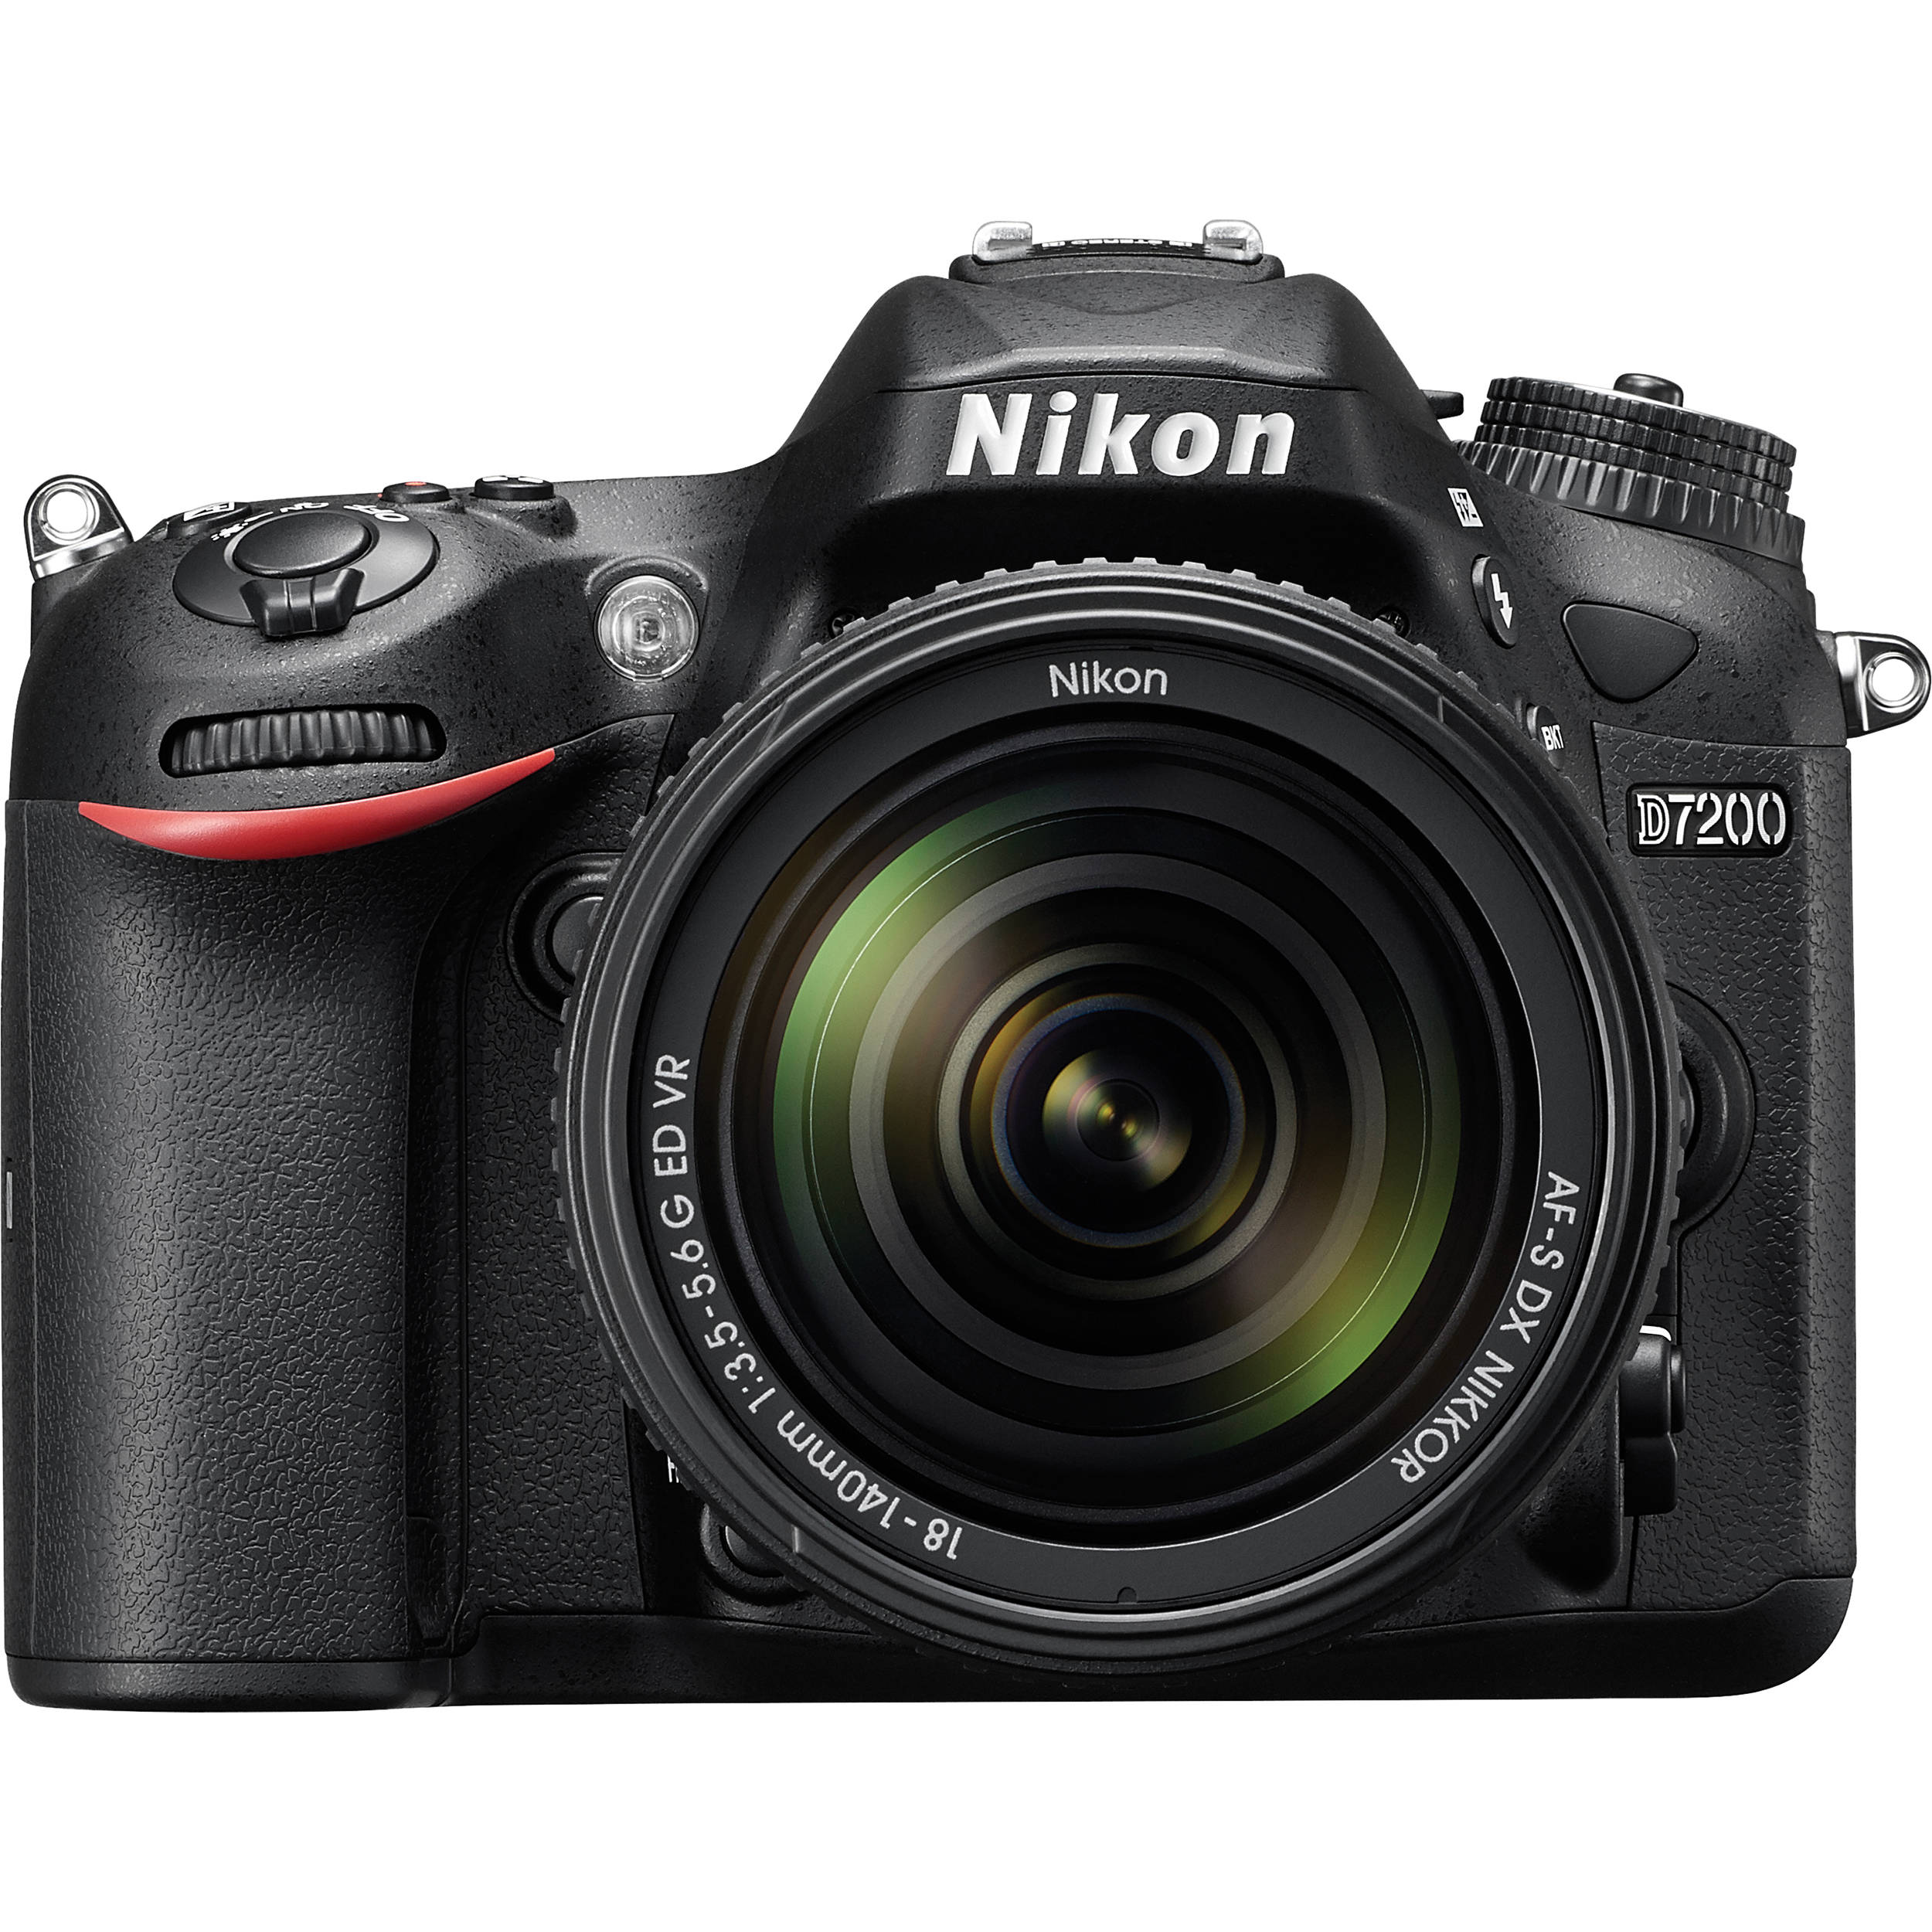 Nikon D7200 DSLR Camera with 18-140mm Lens 1555 (International Model) + MicroFiber Cloth + Deluxe Lens Pouch + Carrying Case Bundle